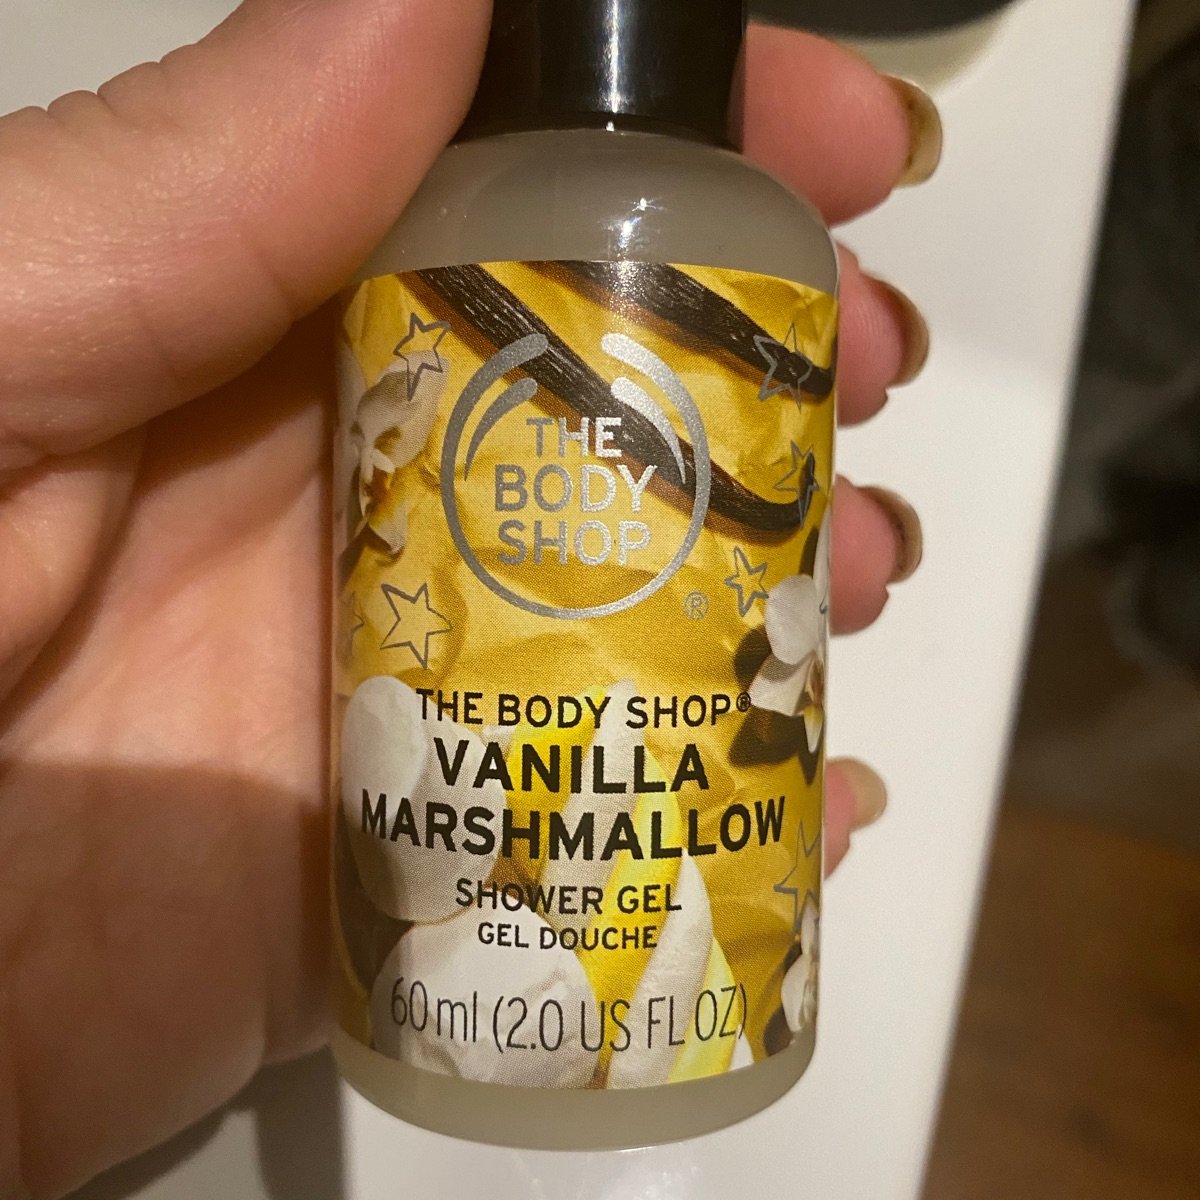 The Body Shop Shower gel Vanilla Marshmallow Review | abillion